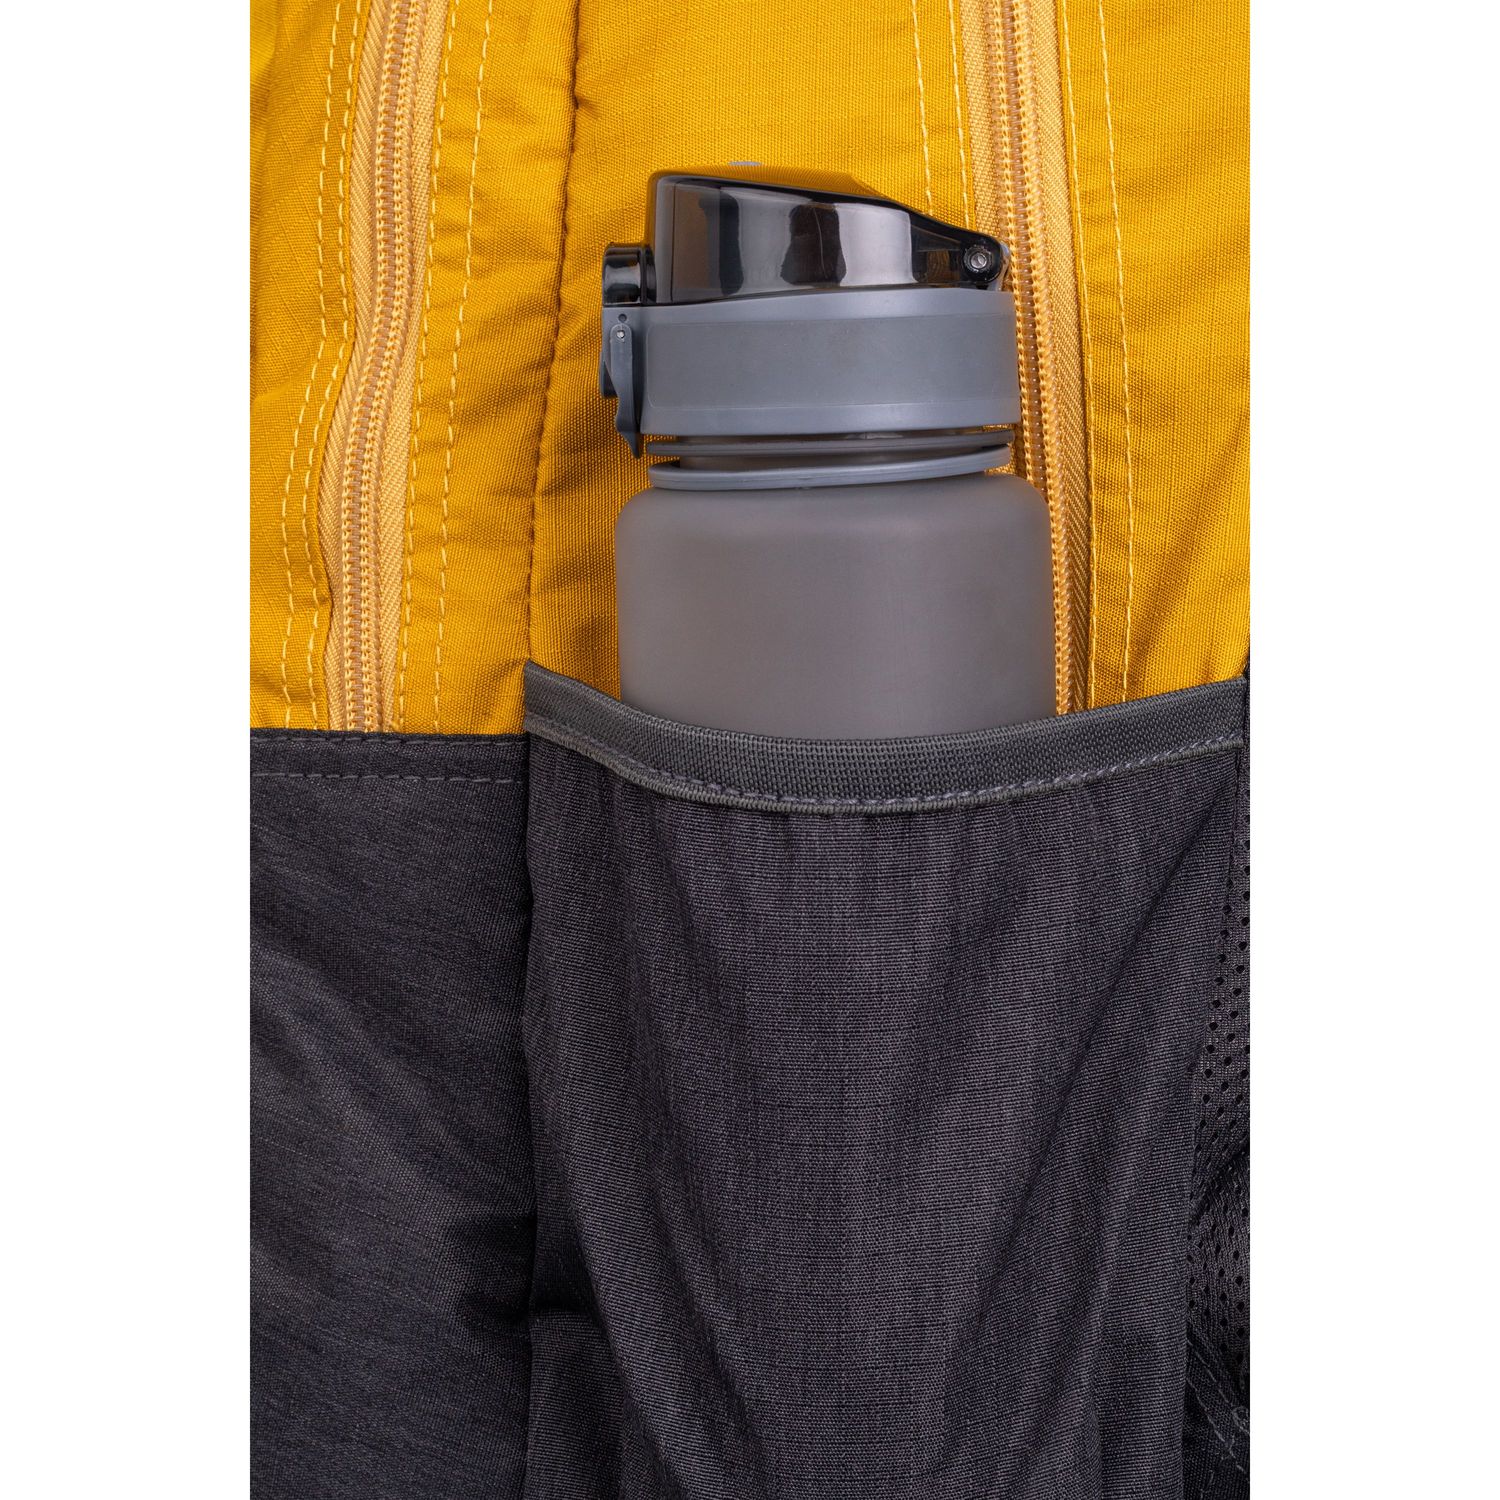 Рюкзак CoolPack Rіder Rpet Duo Colors Mustard&Grey, 27 л, 44x33x19 см (F059643) - фото 4